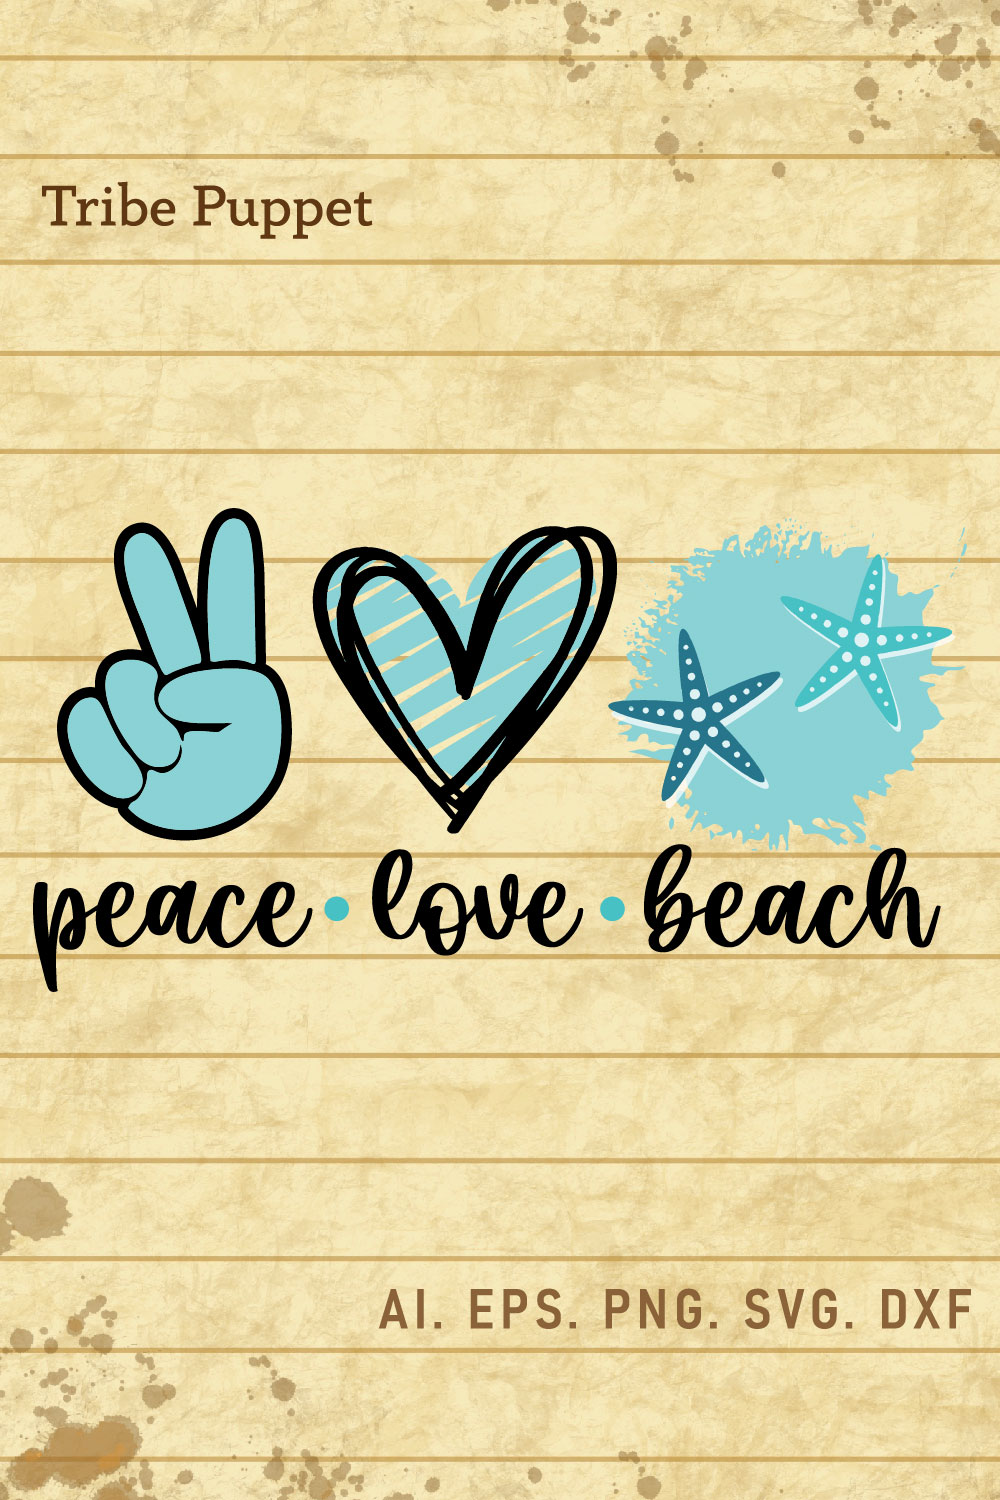 Peace Love Beach pinterest preview image.